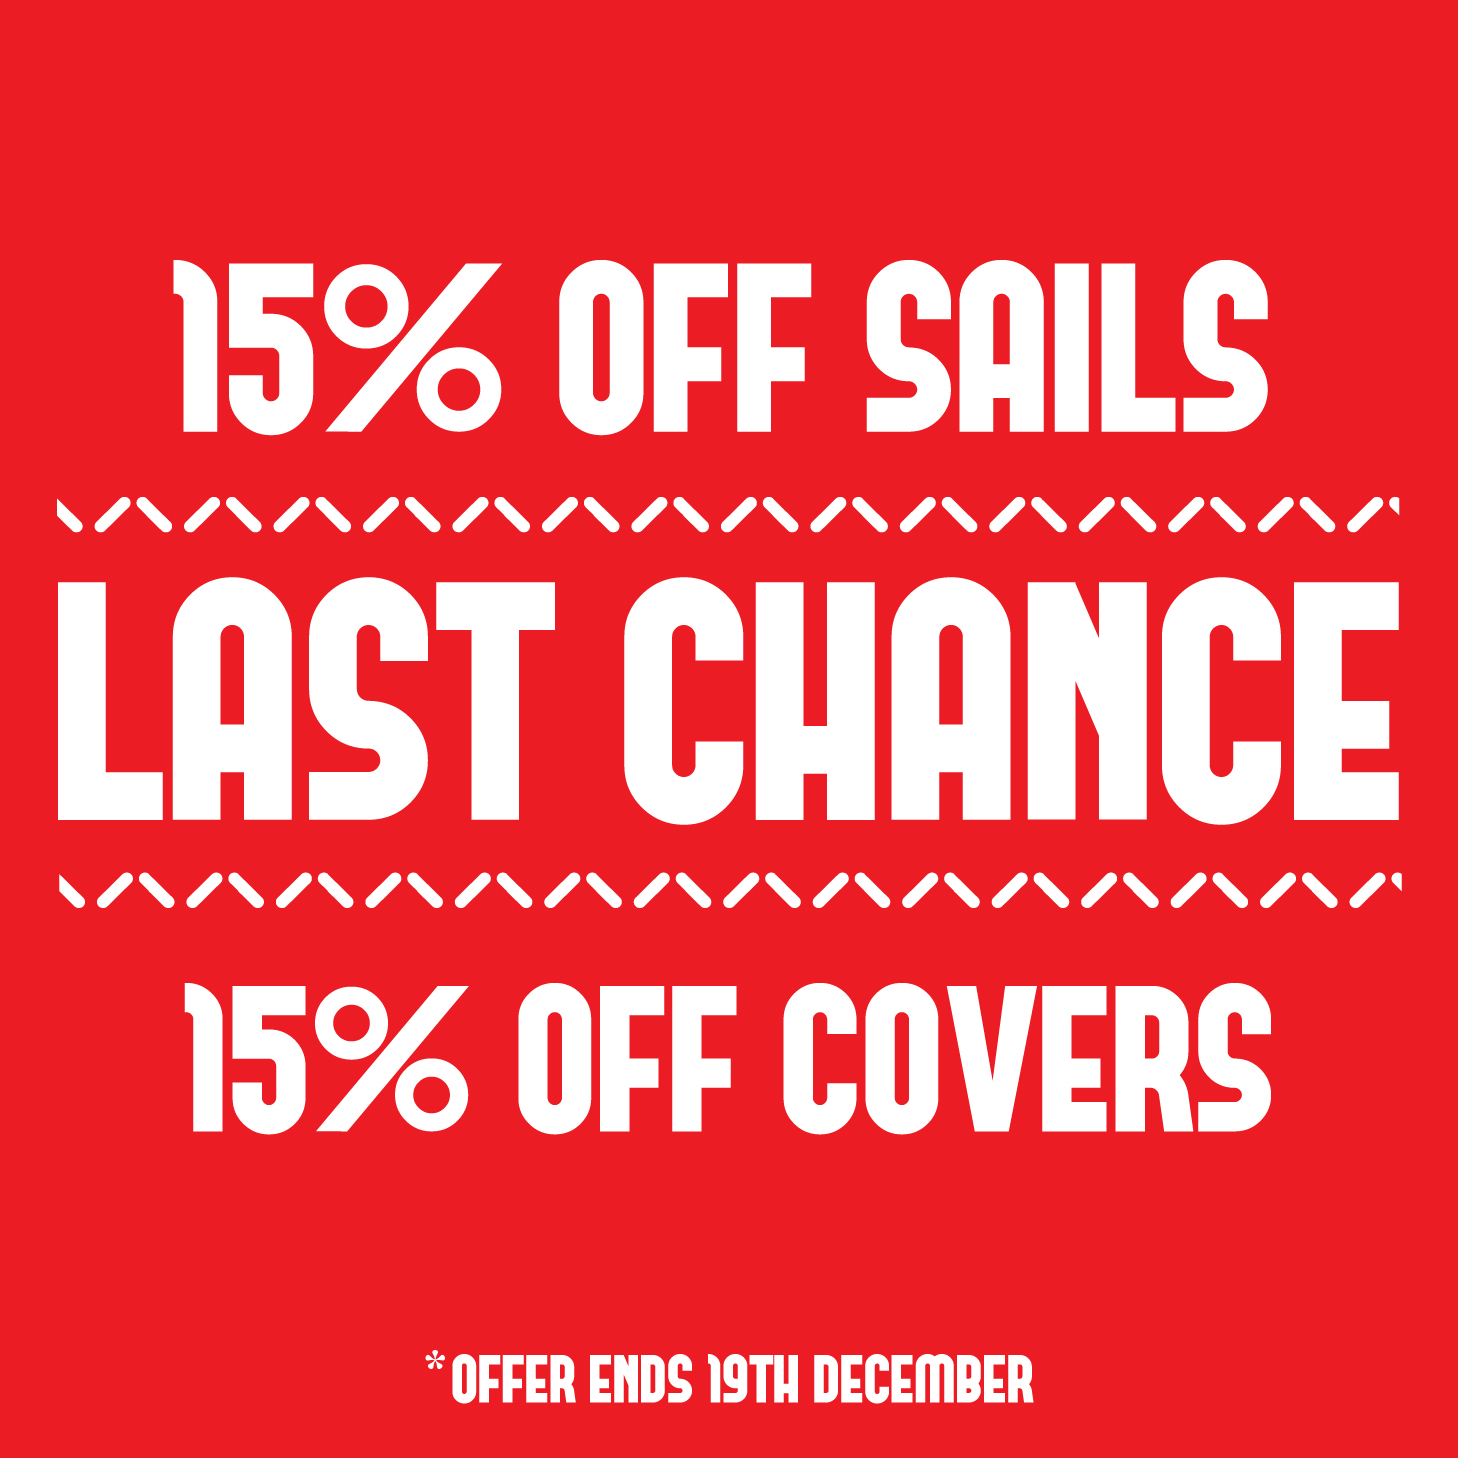 Sail & Cover Sale - Last Chance!